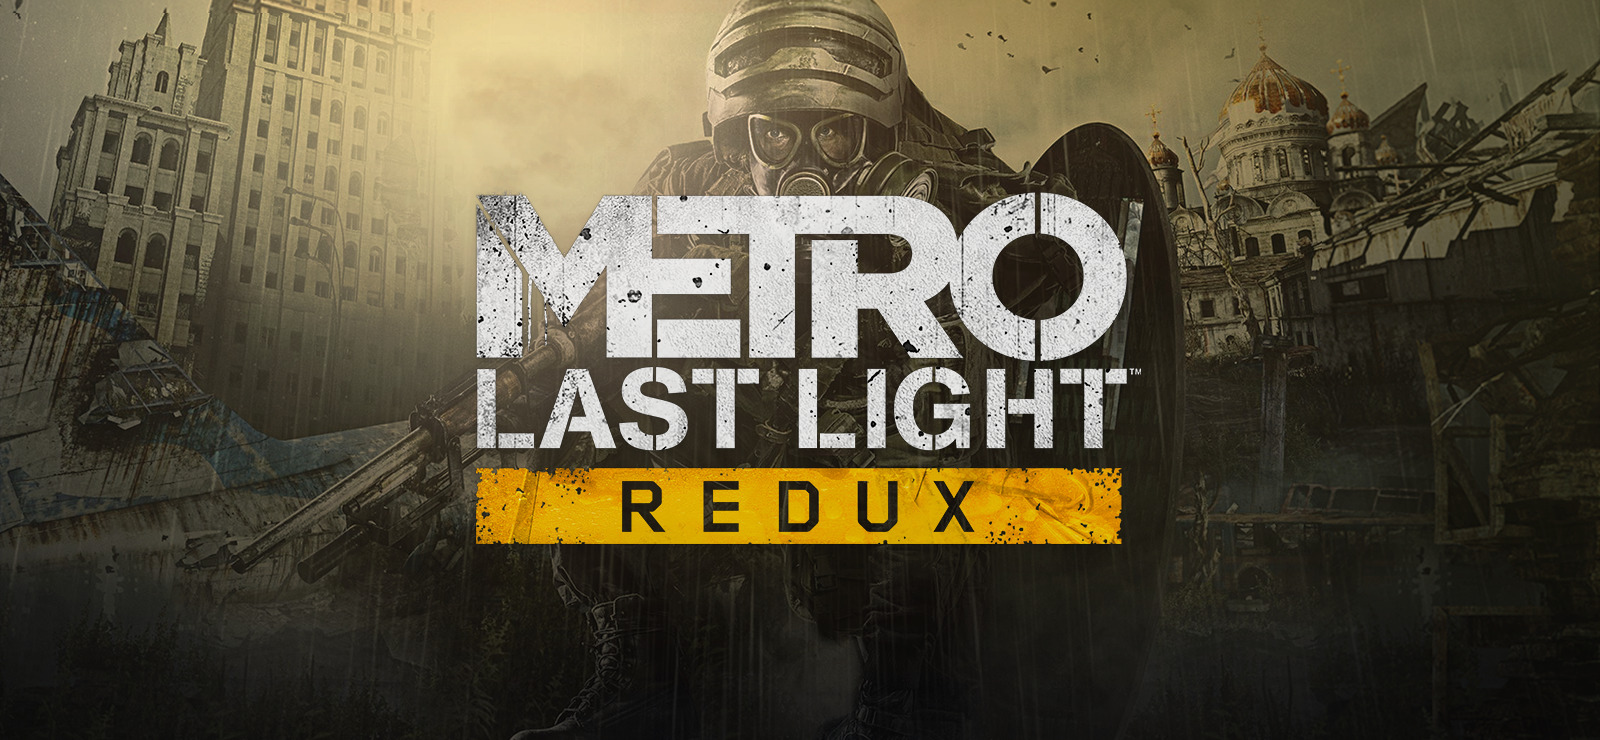 Metro: Last Light Redux on GOG.com